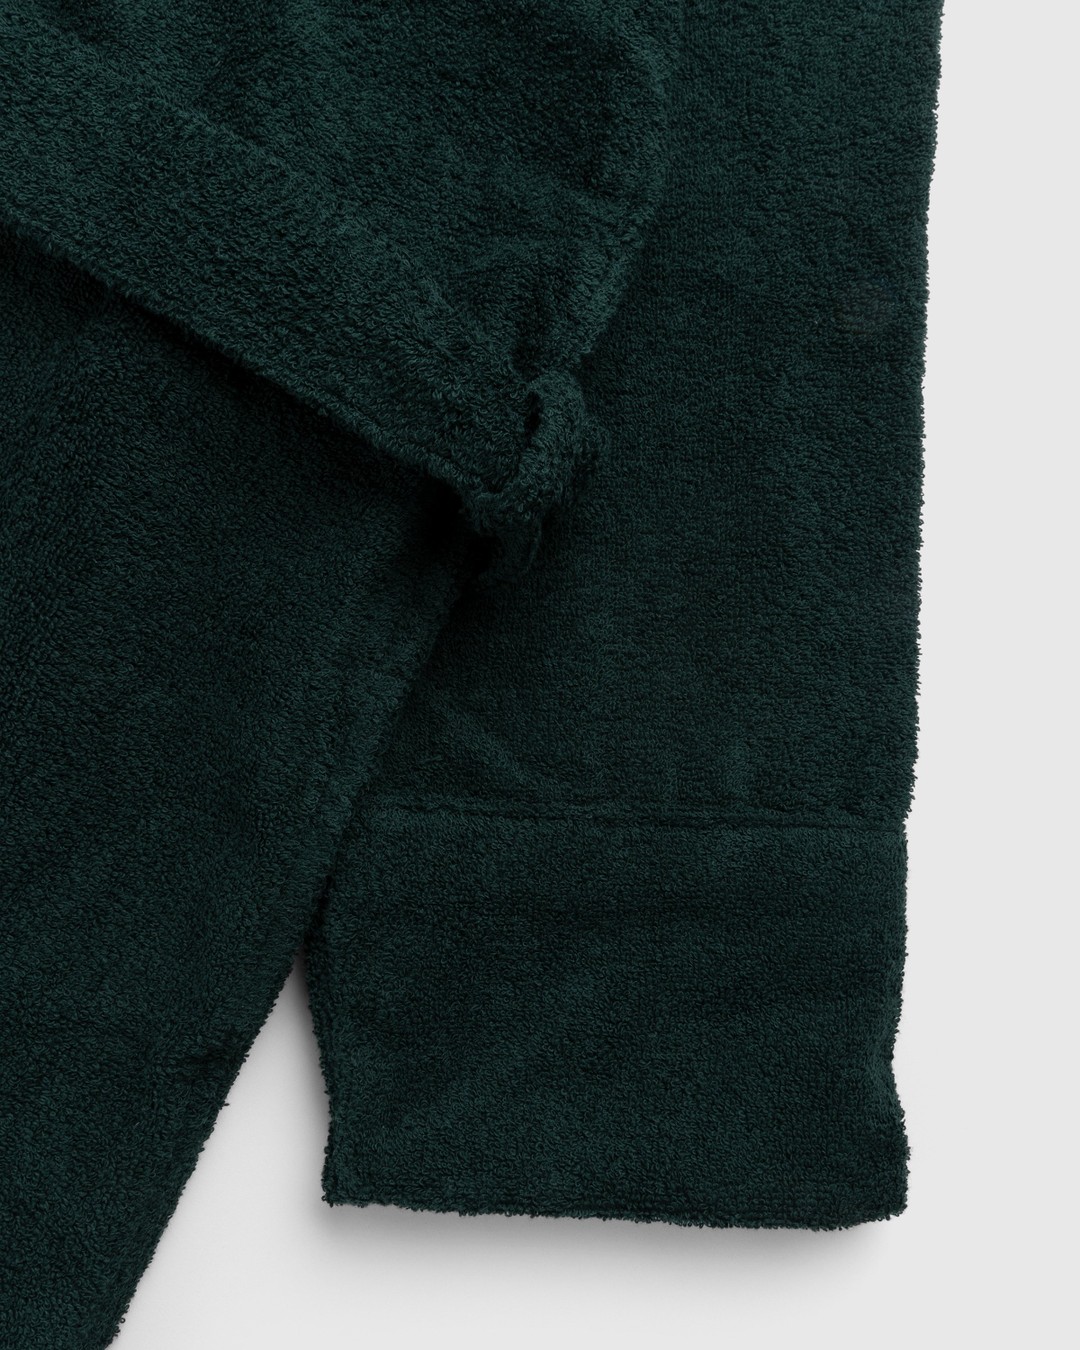 Tekla – Hooded Bathrobe Solid Forest Green - Bathrobes - Green - Image 5